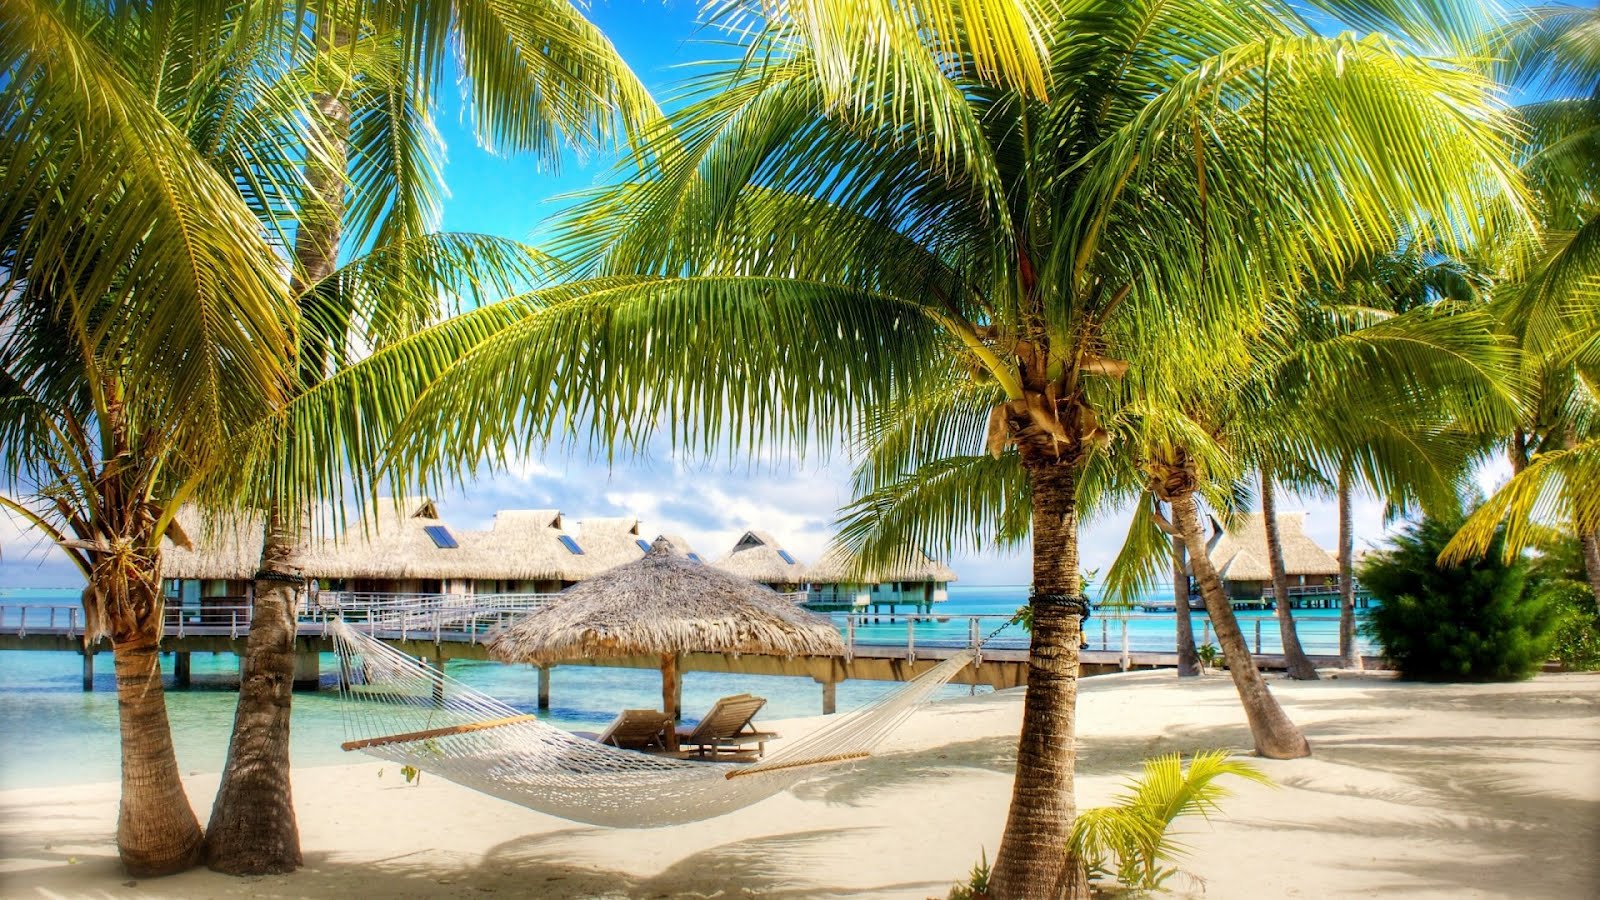 Tropical Beach Paradise Wallpaper Hd Desktop Wallpaper